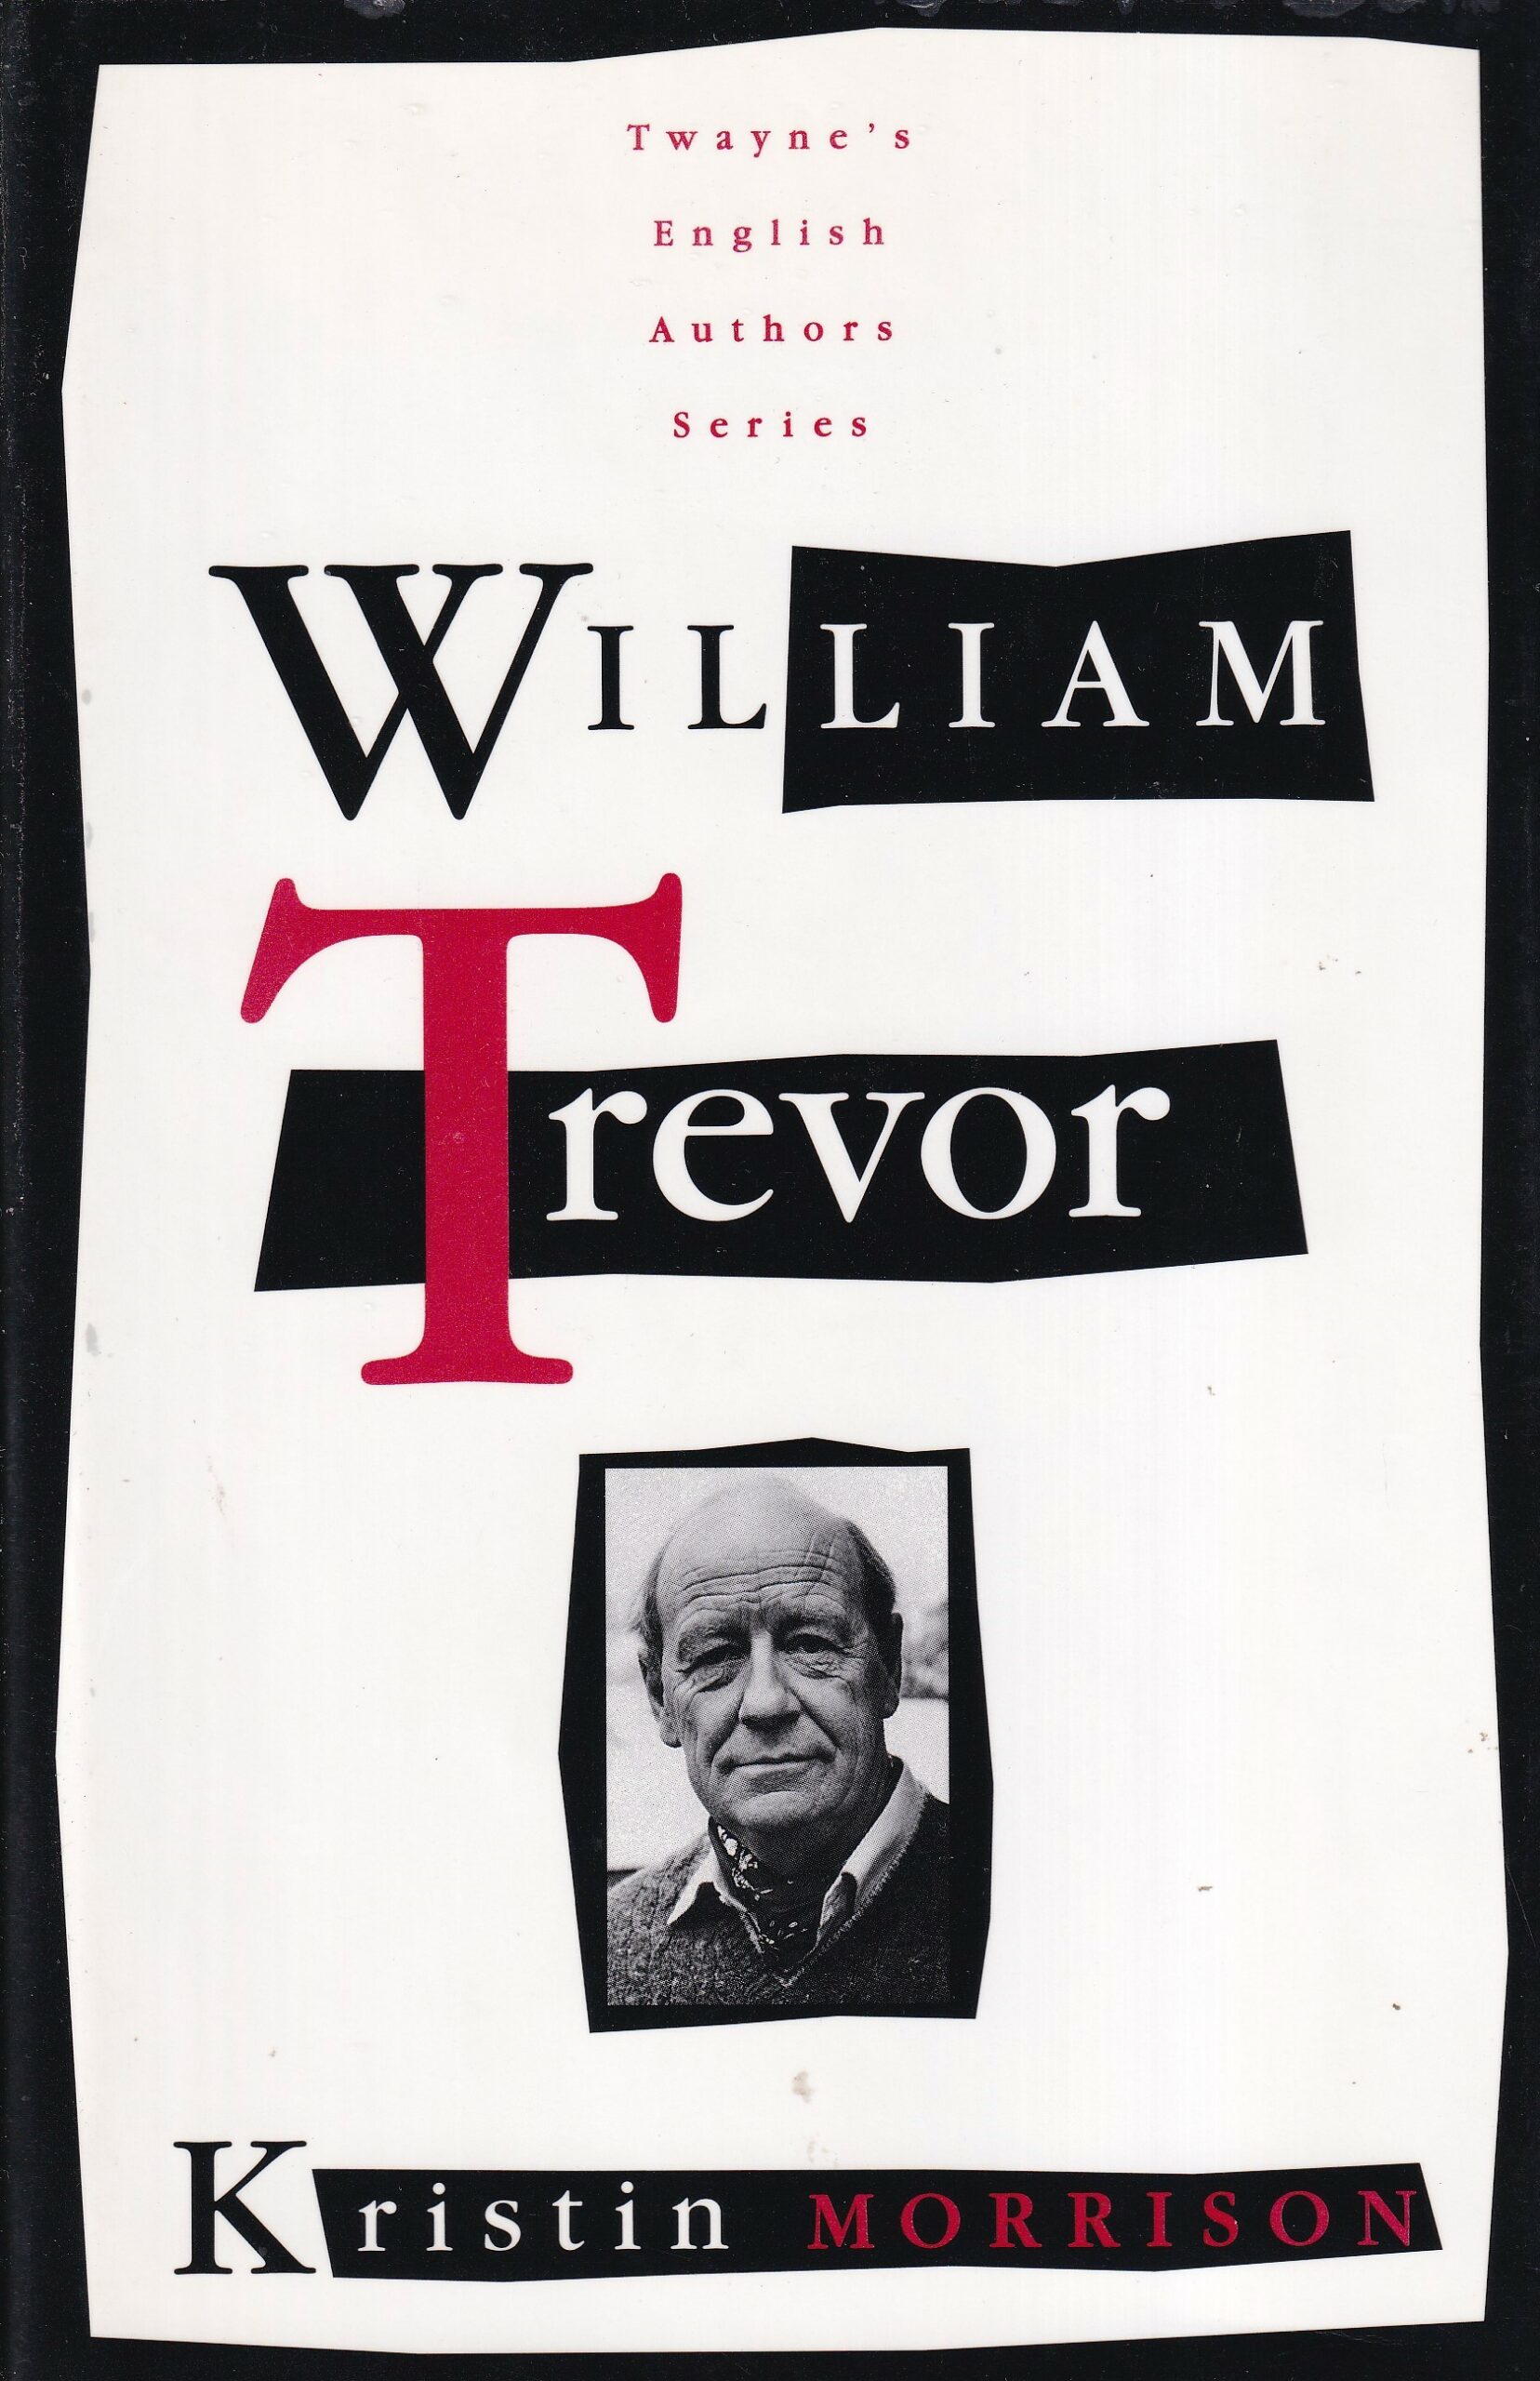 William Trevor by Kristin Morrison